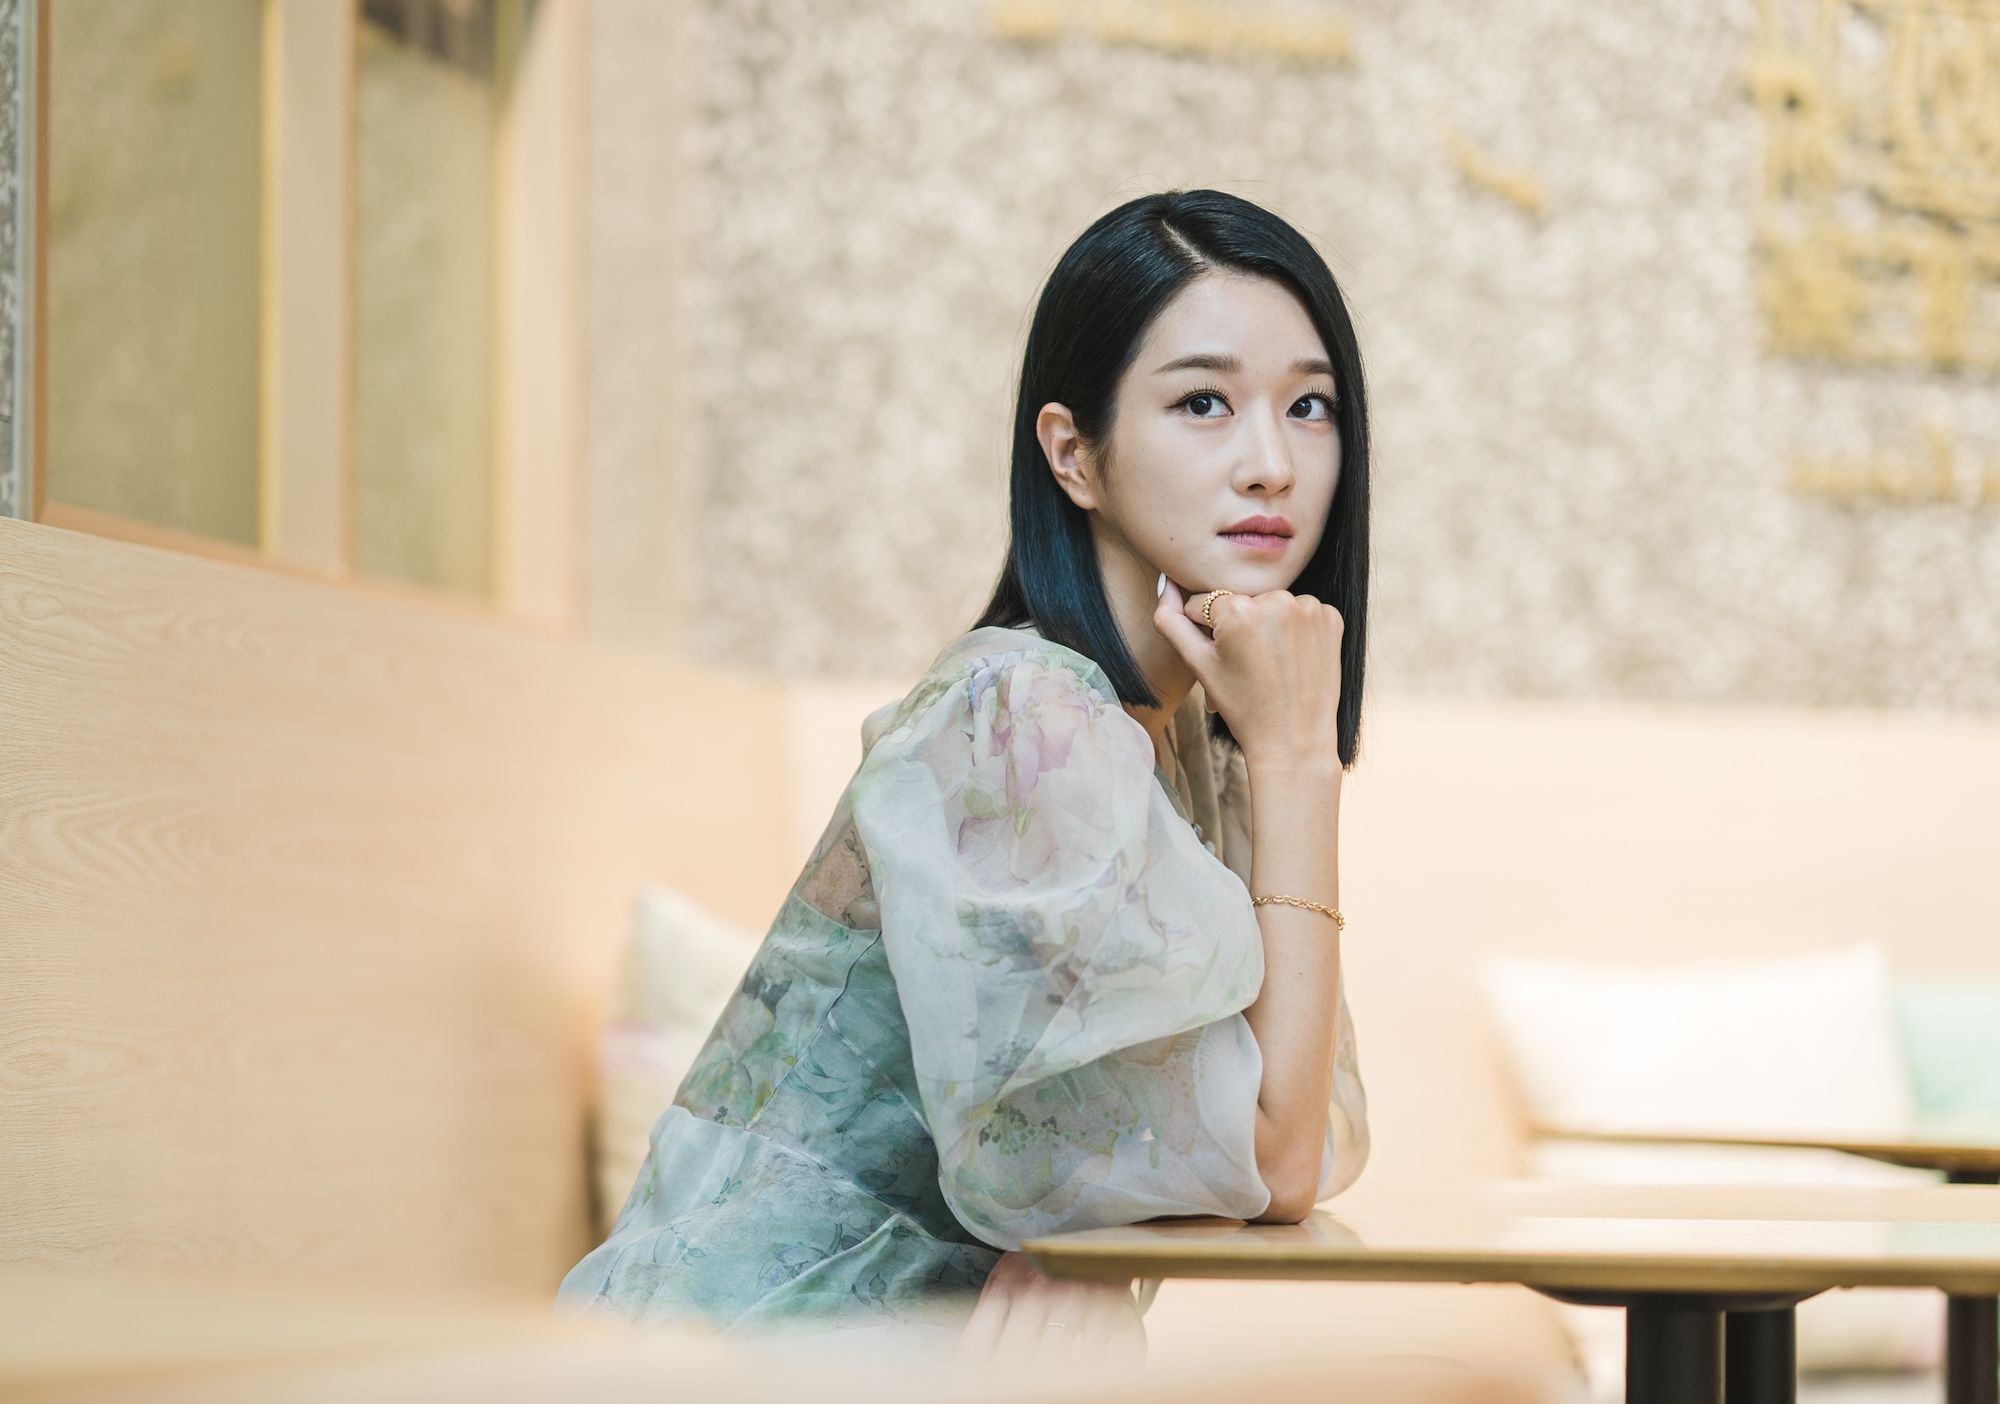 Recreate Seo Ye Jis Top Fashion Moments From K Drama “its Okay To Not Be Okay” Thehomeground 0986